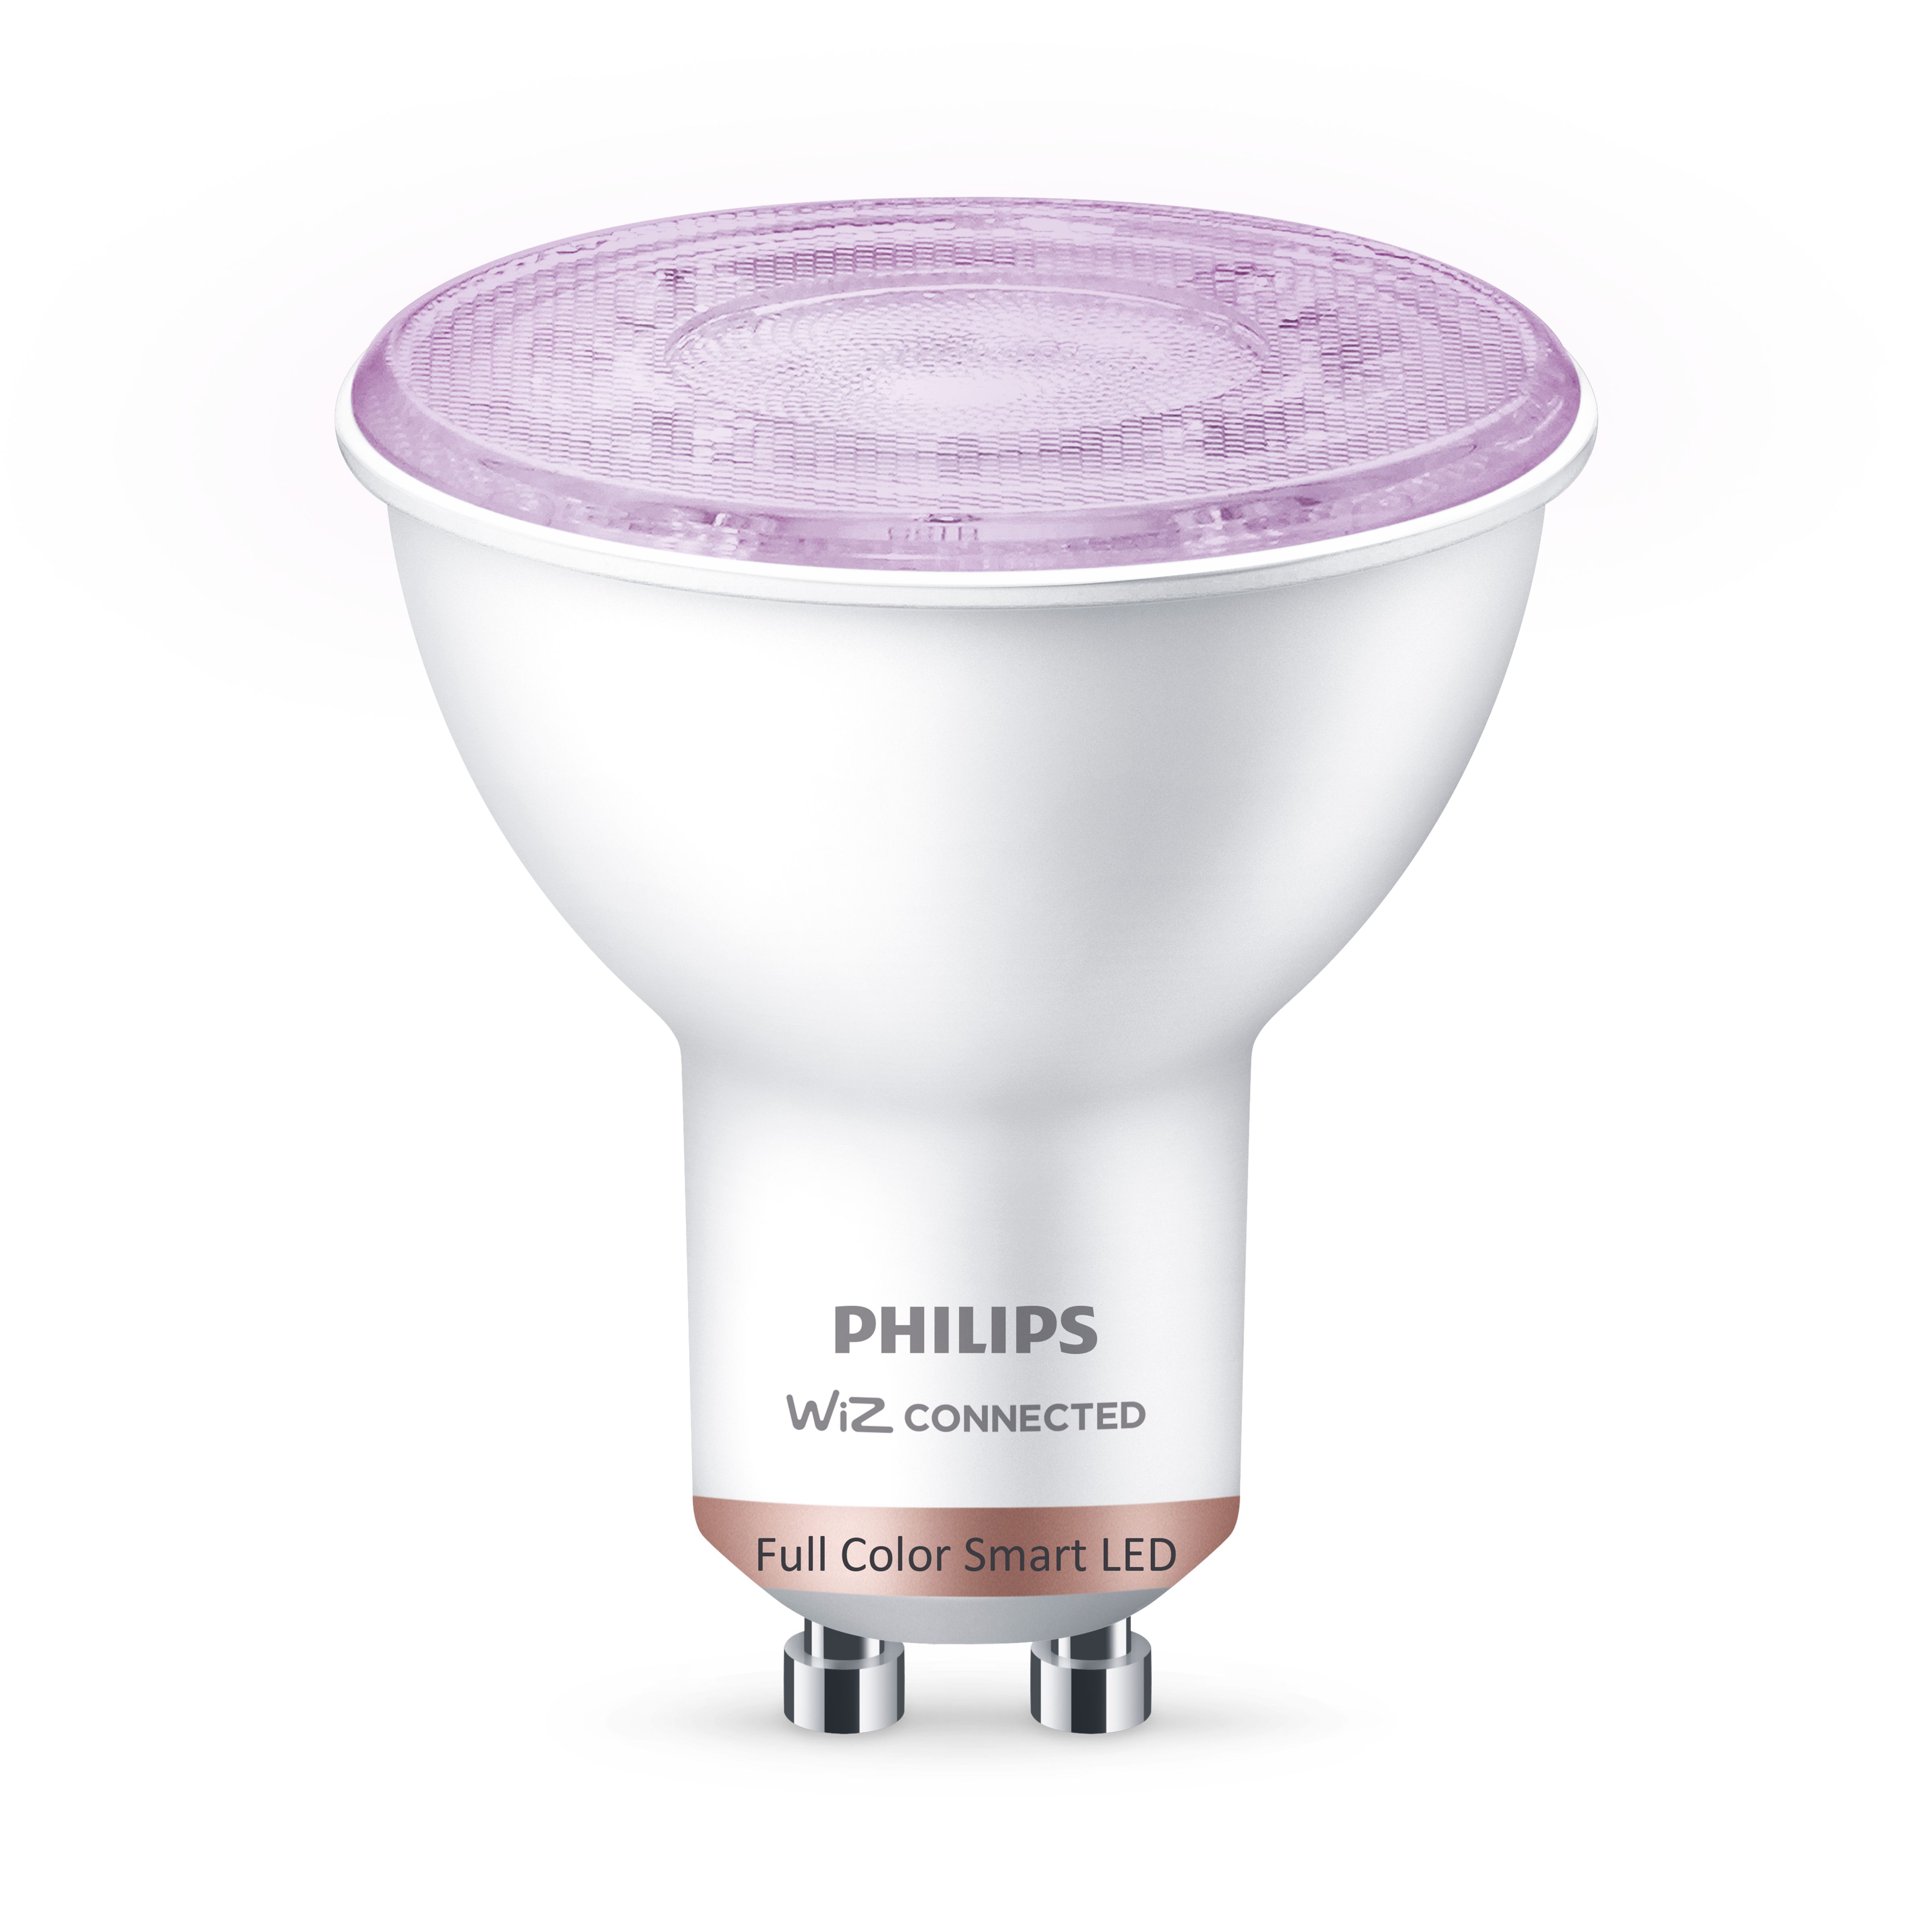 Philips PhilipsSmart GU10 50W LED Cool white, RGB & warm white Reflector Dimmable Smart Light bulb